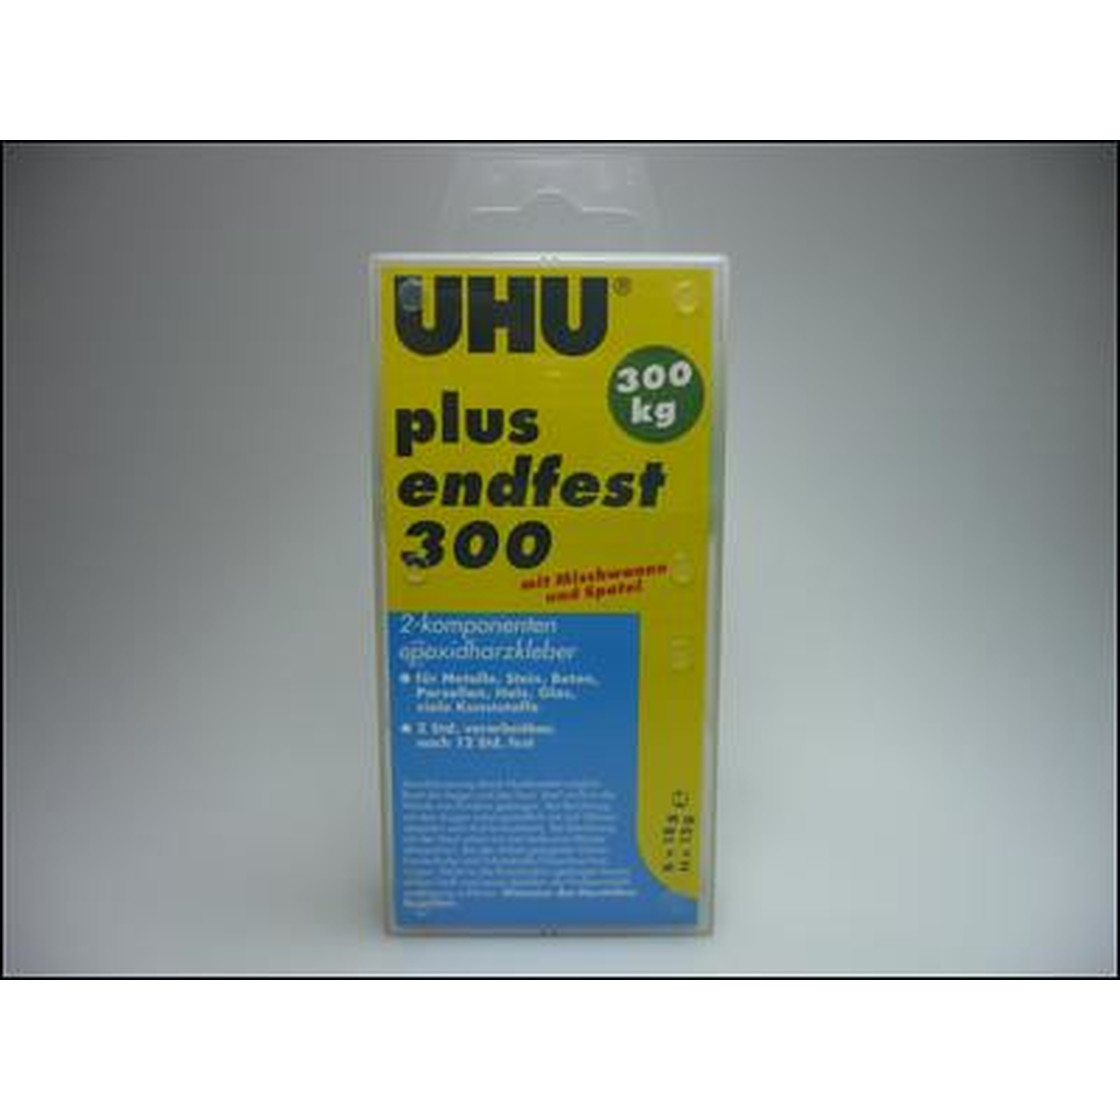 Glue UHU plus endfest 300 (33gr), 9,04 €